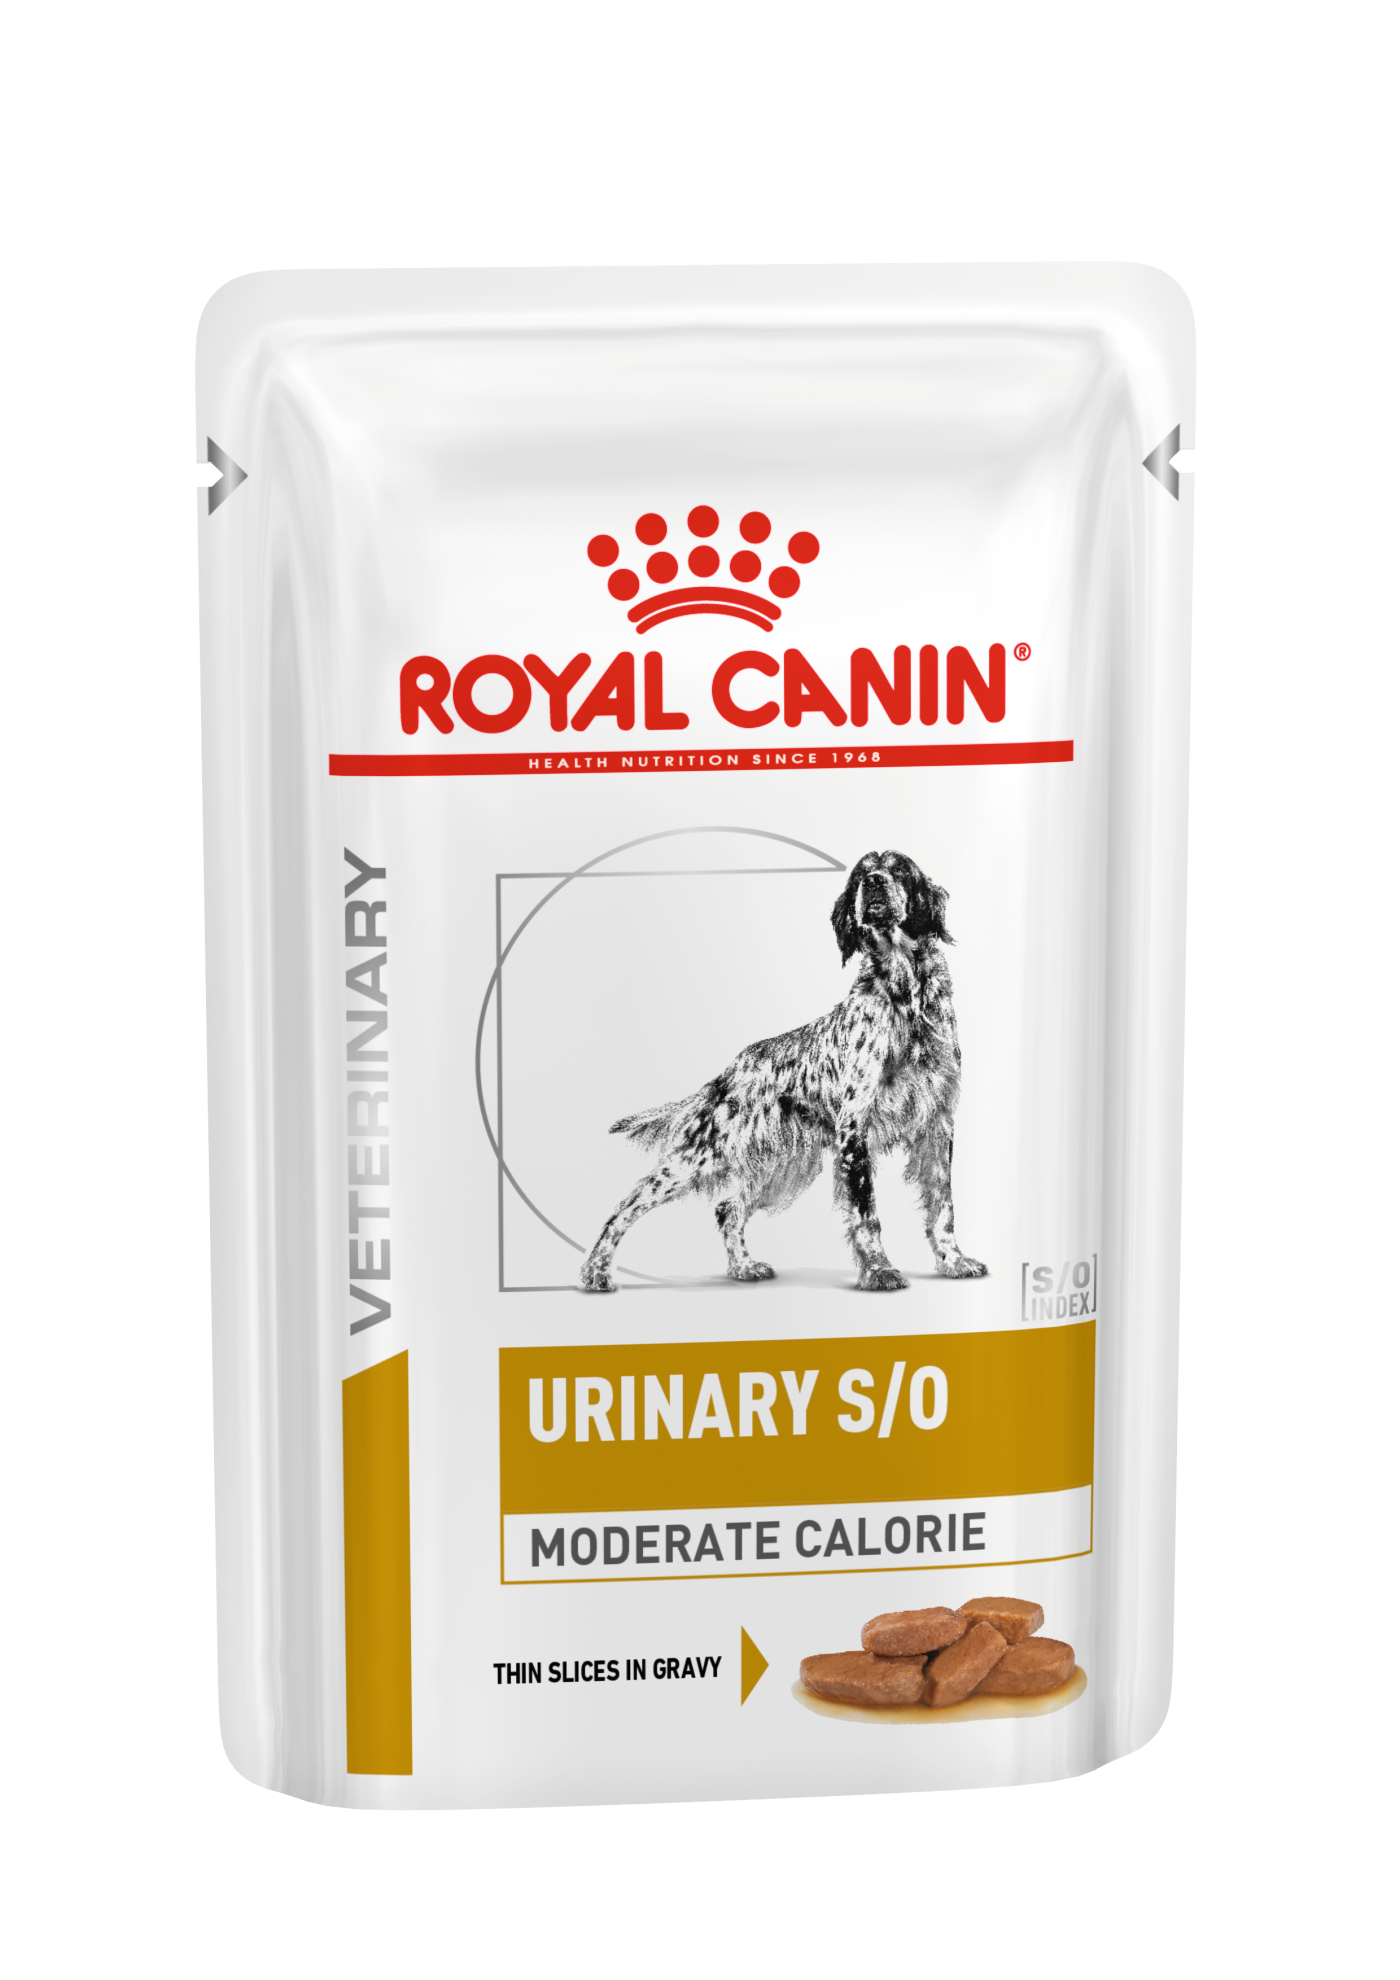 Urinary S/O Moderate Calorie Karma mokra Royal Canin